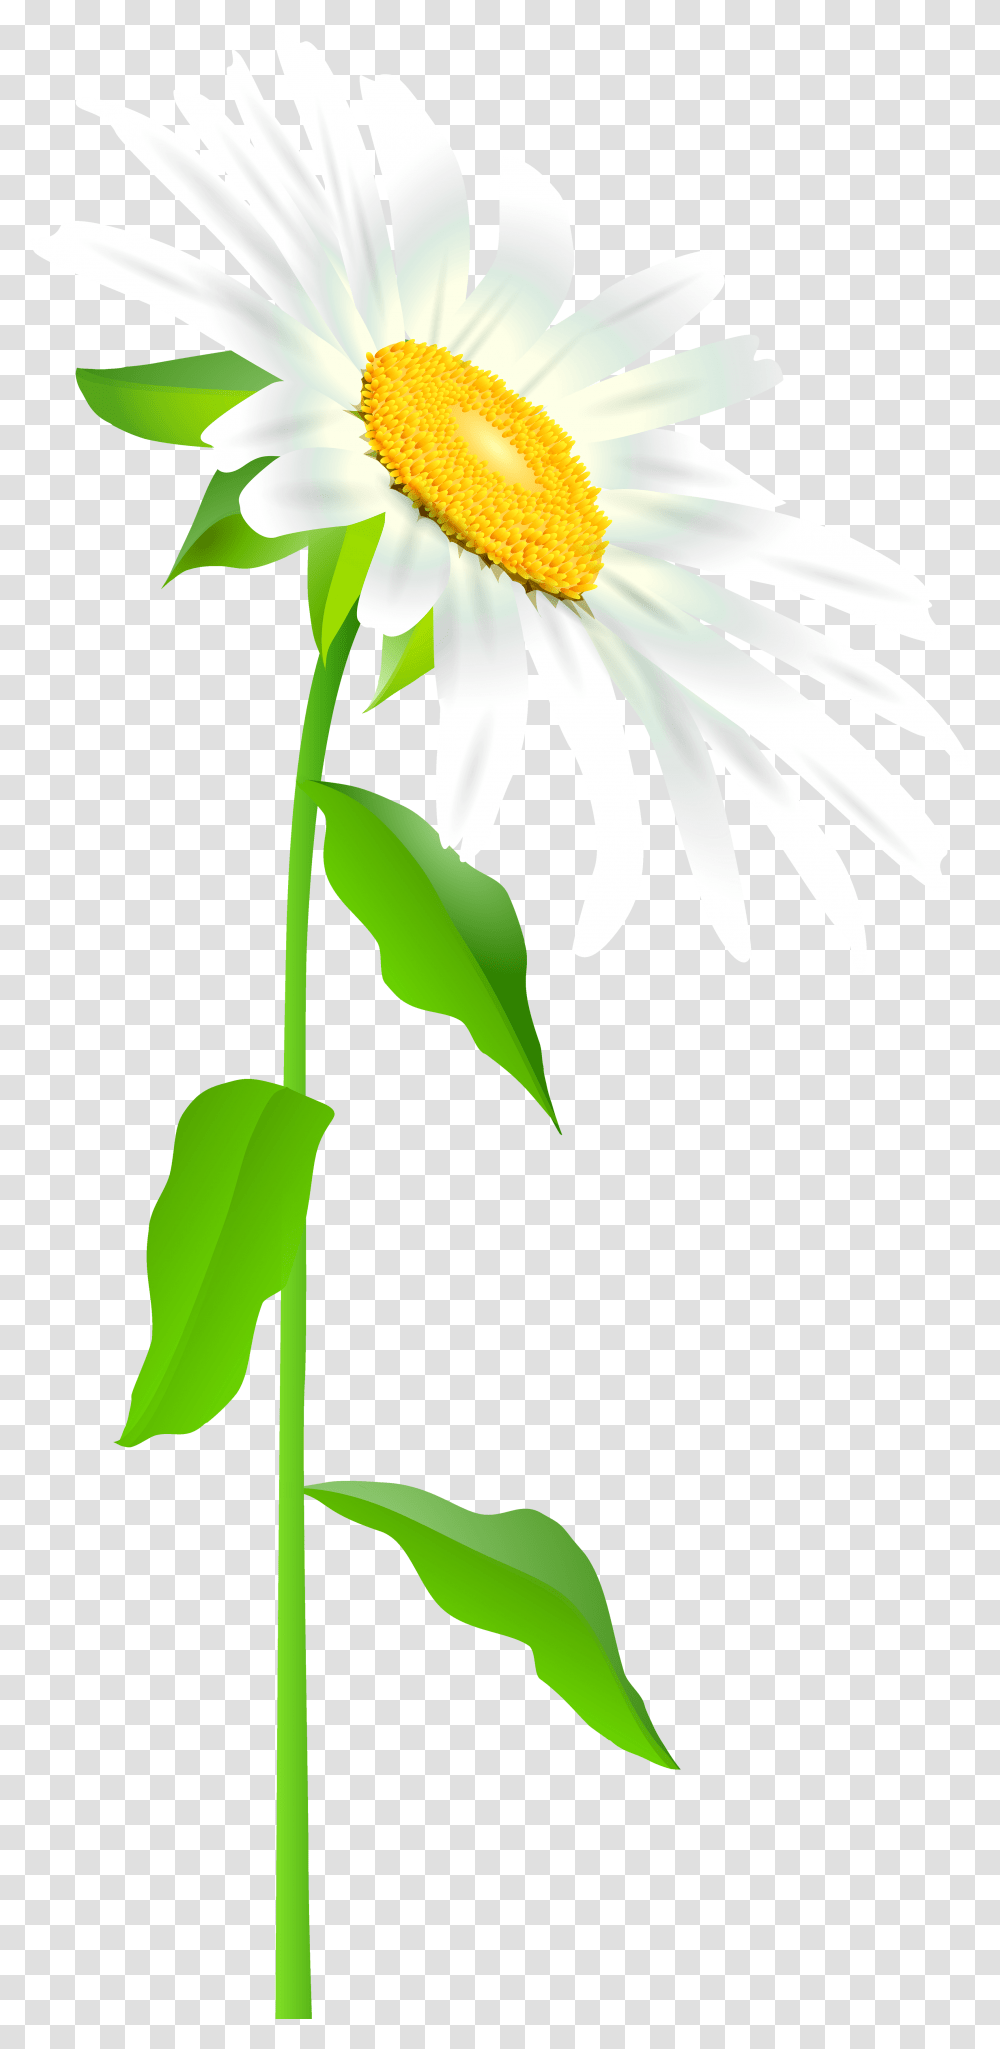 Daisy Clipart Long Stem Flower Daisy Flower With Stem, Plant, Blossom, Daisies, Petal Transparent Png